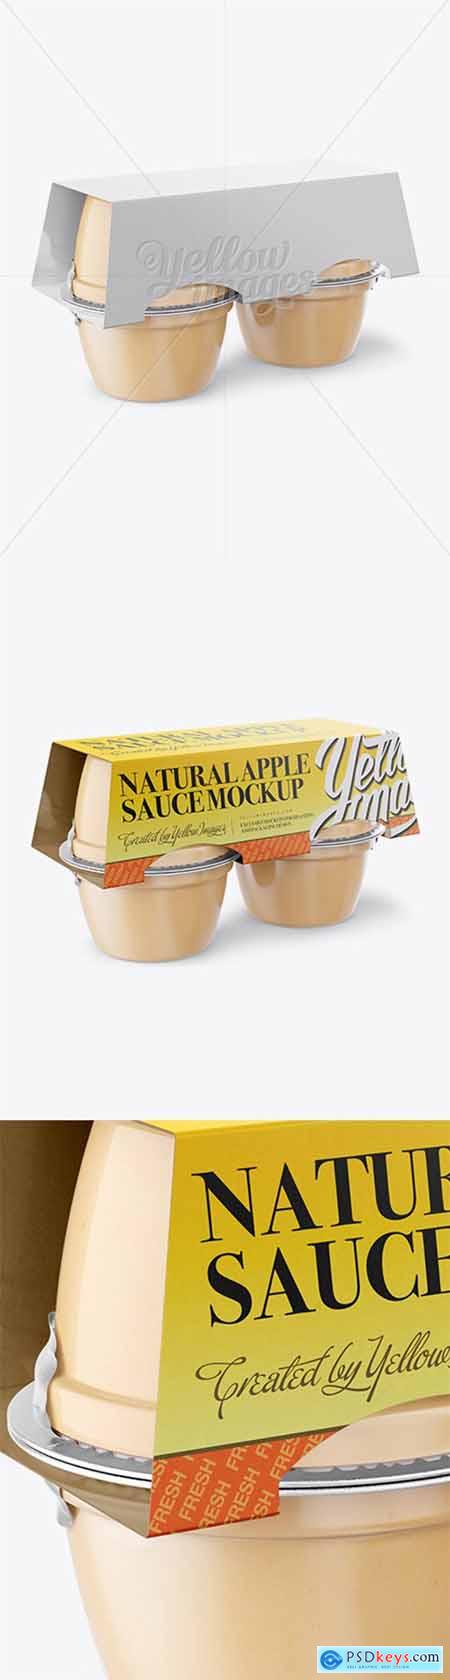 Natural Apple Sauce 4-4 Oz Cups Mockup - Halfside View 13953